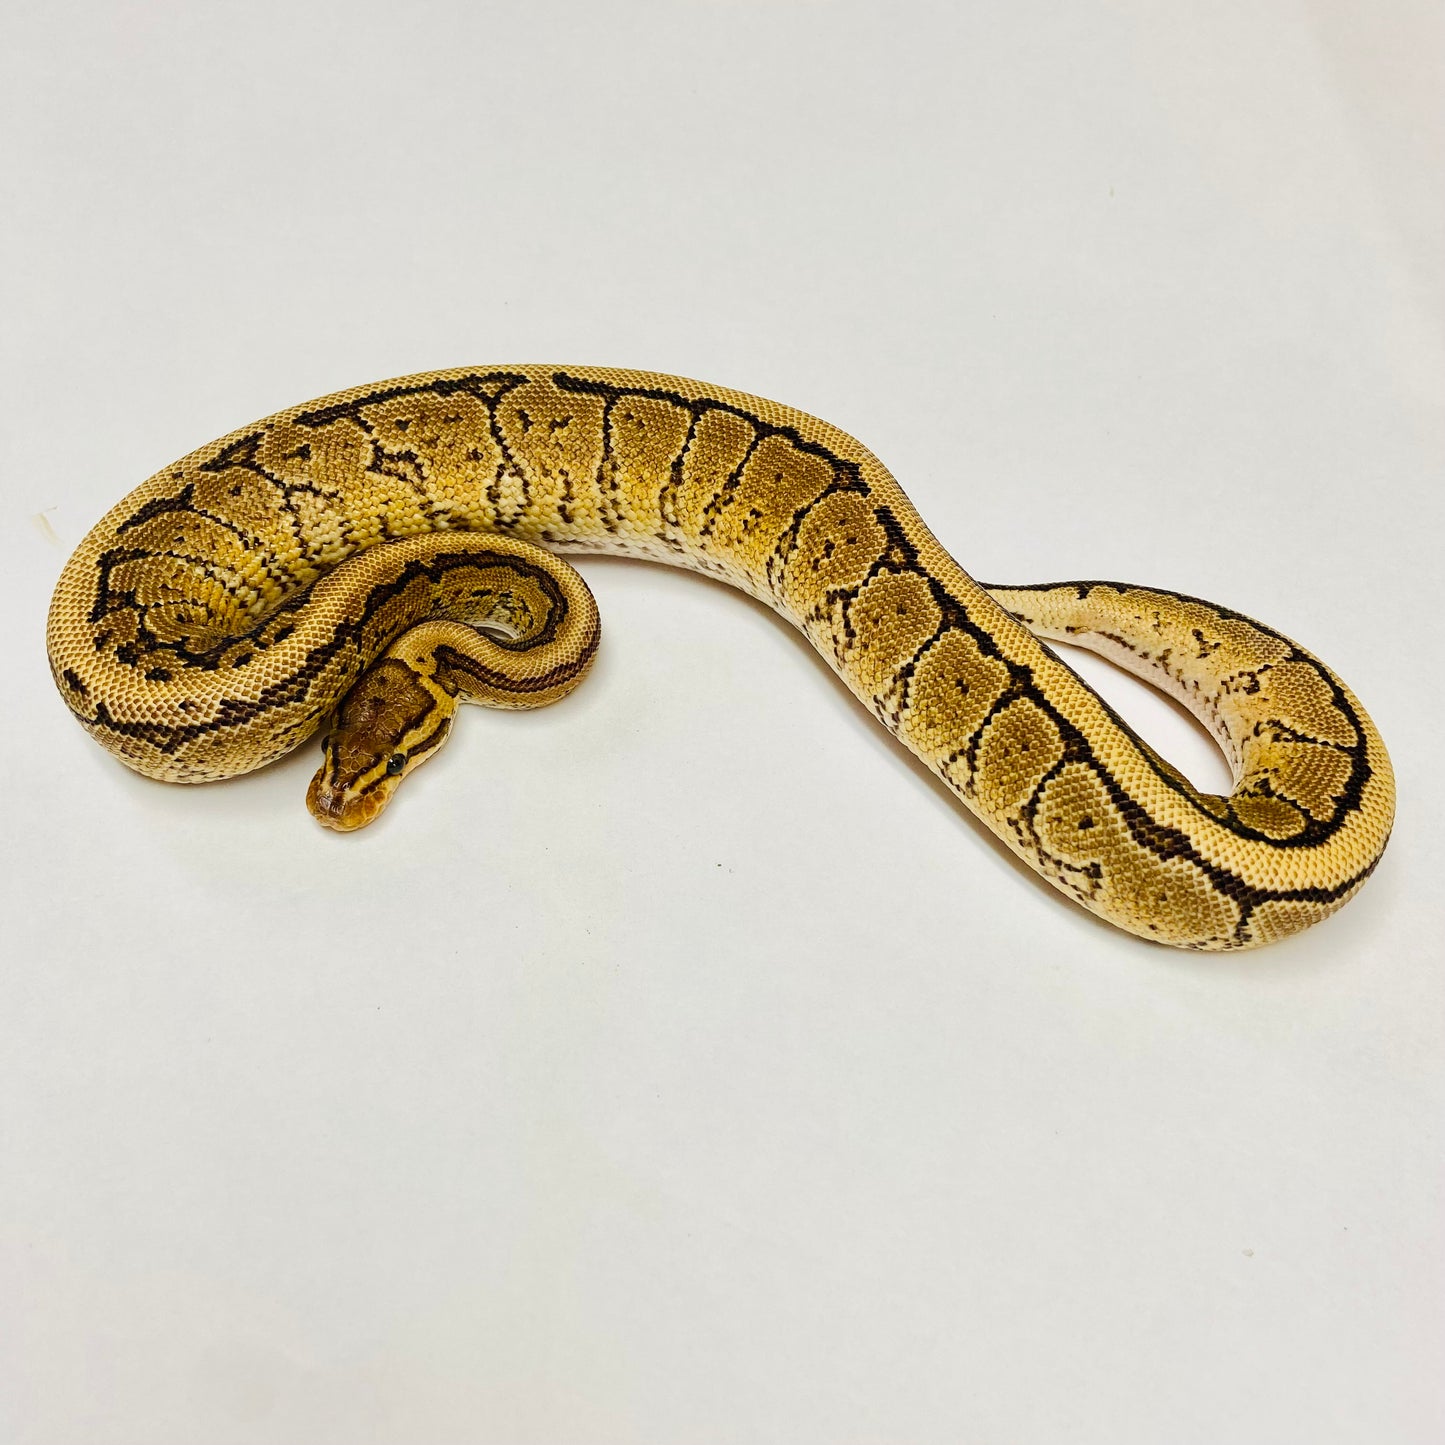 Pinstripe Yellowbelly Ball Python- Male #2023M02